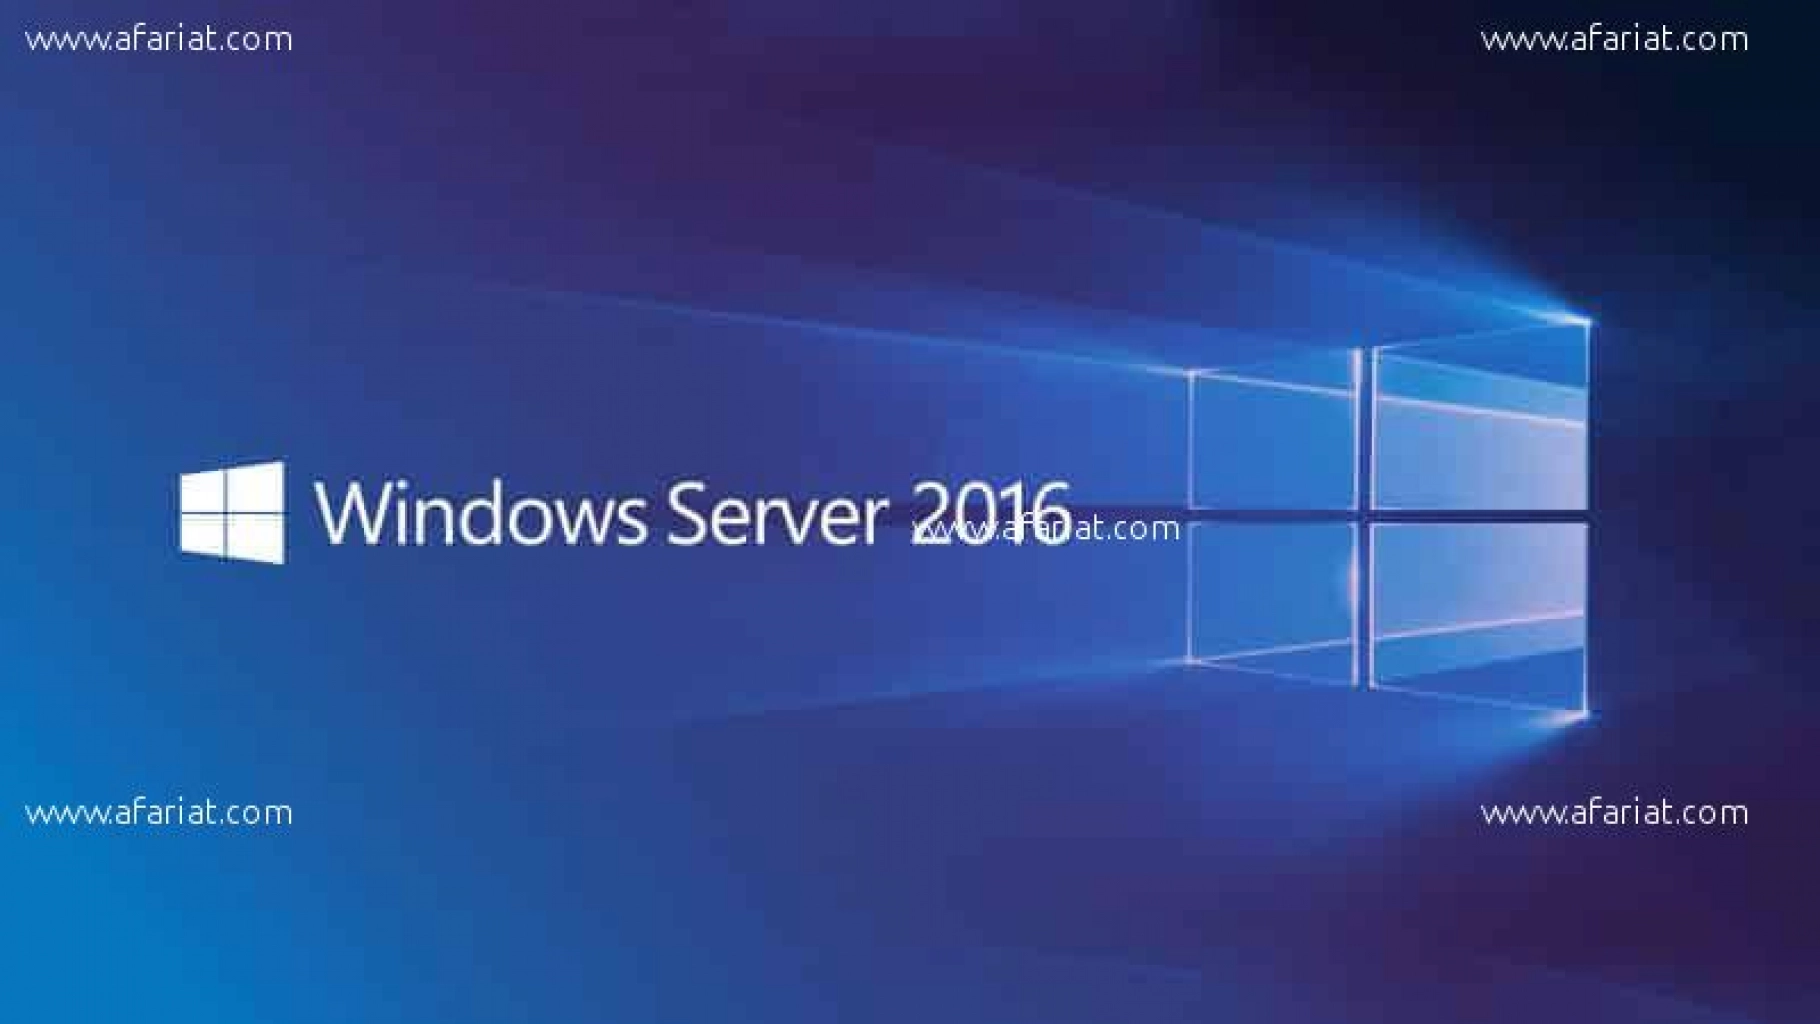 Certification Microsoft Windows Server 2016